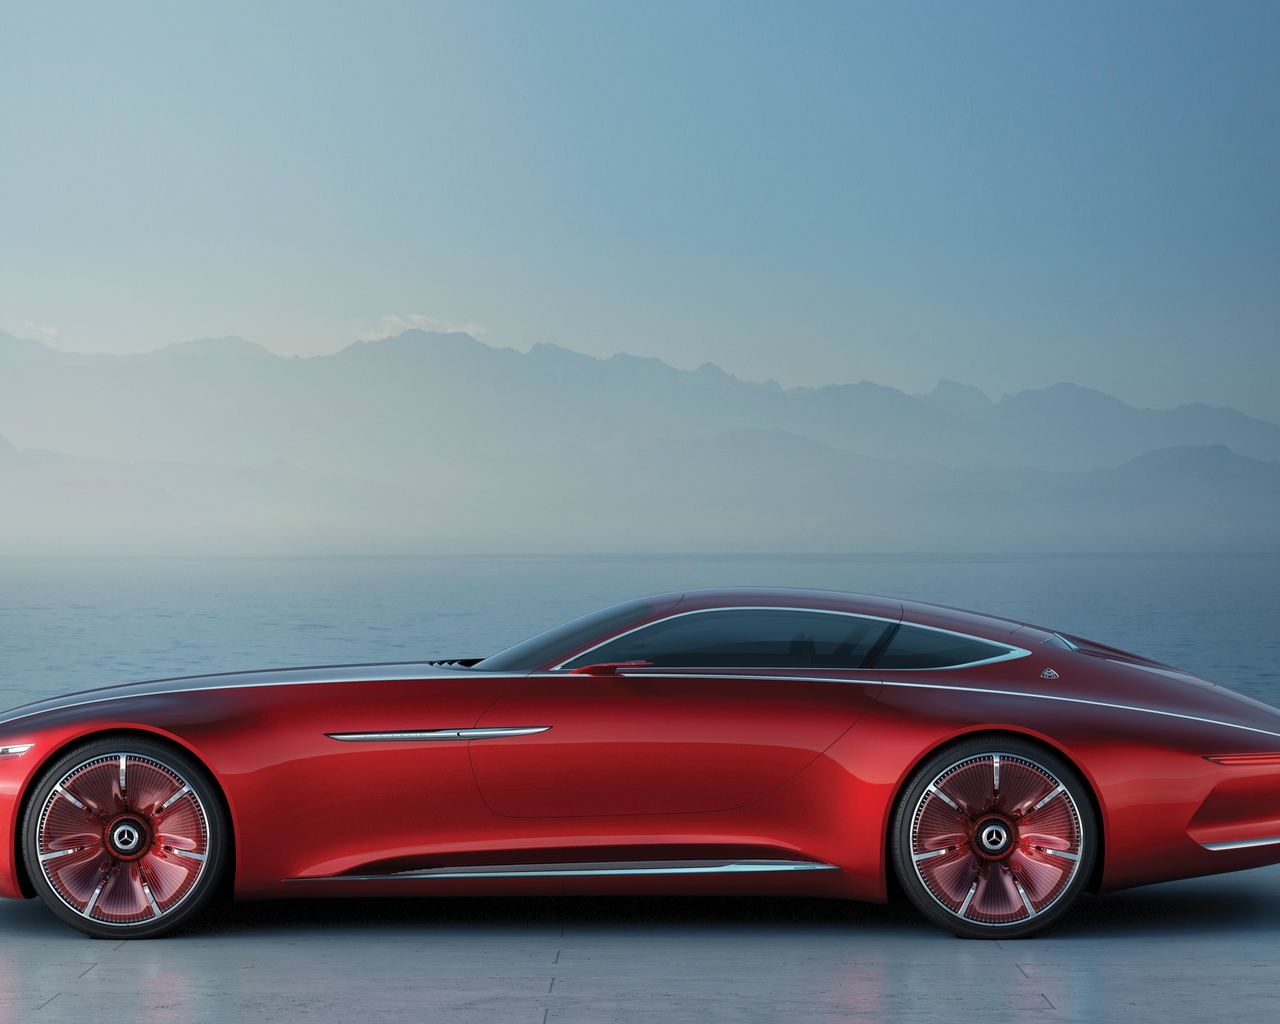 Картинка: Vision, Mercedes-Maybach 6, Mercedes, концепт, электродвигатель, красный, туман, море, горы